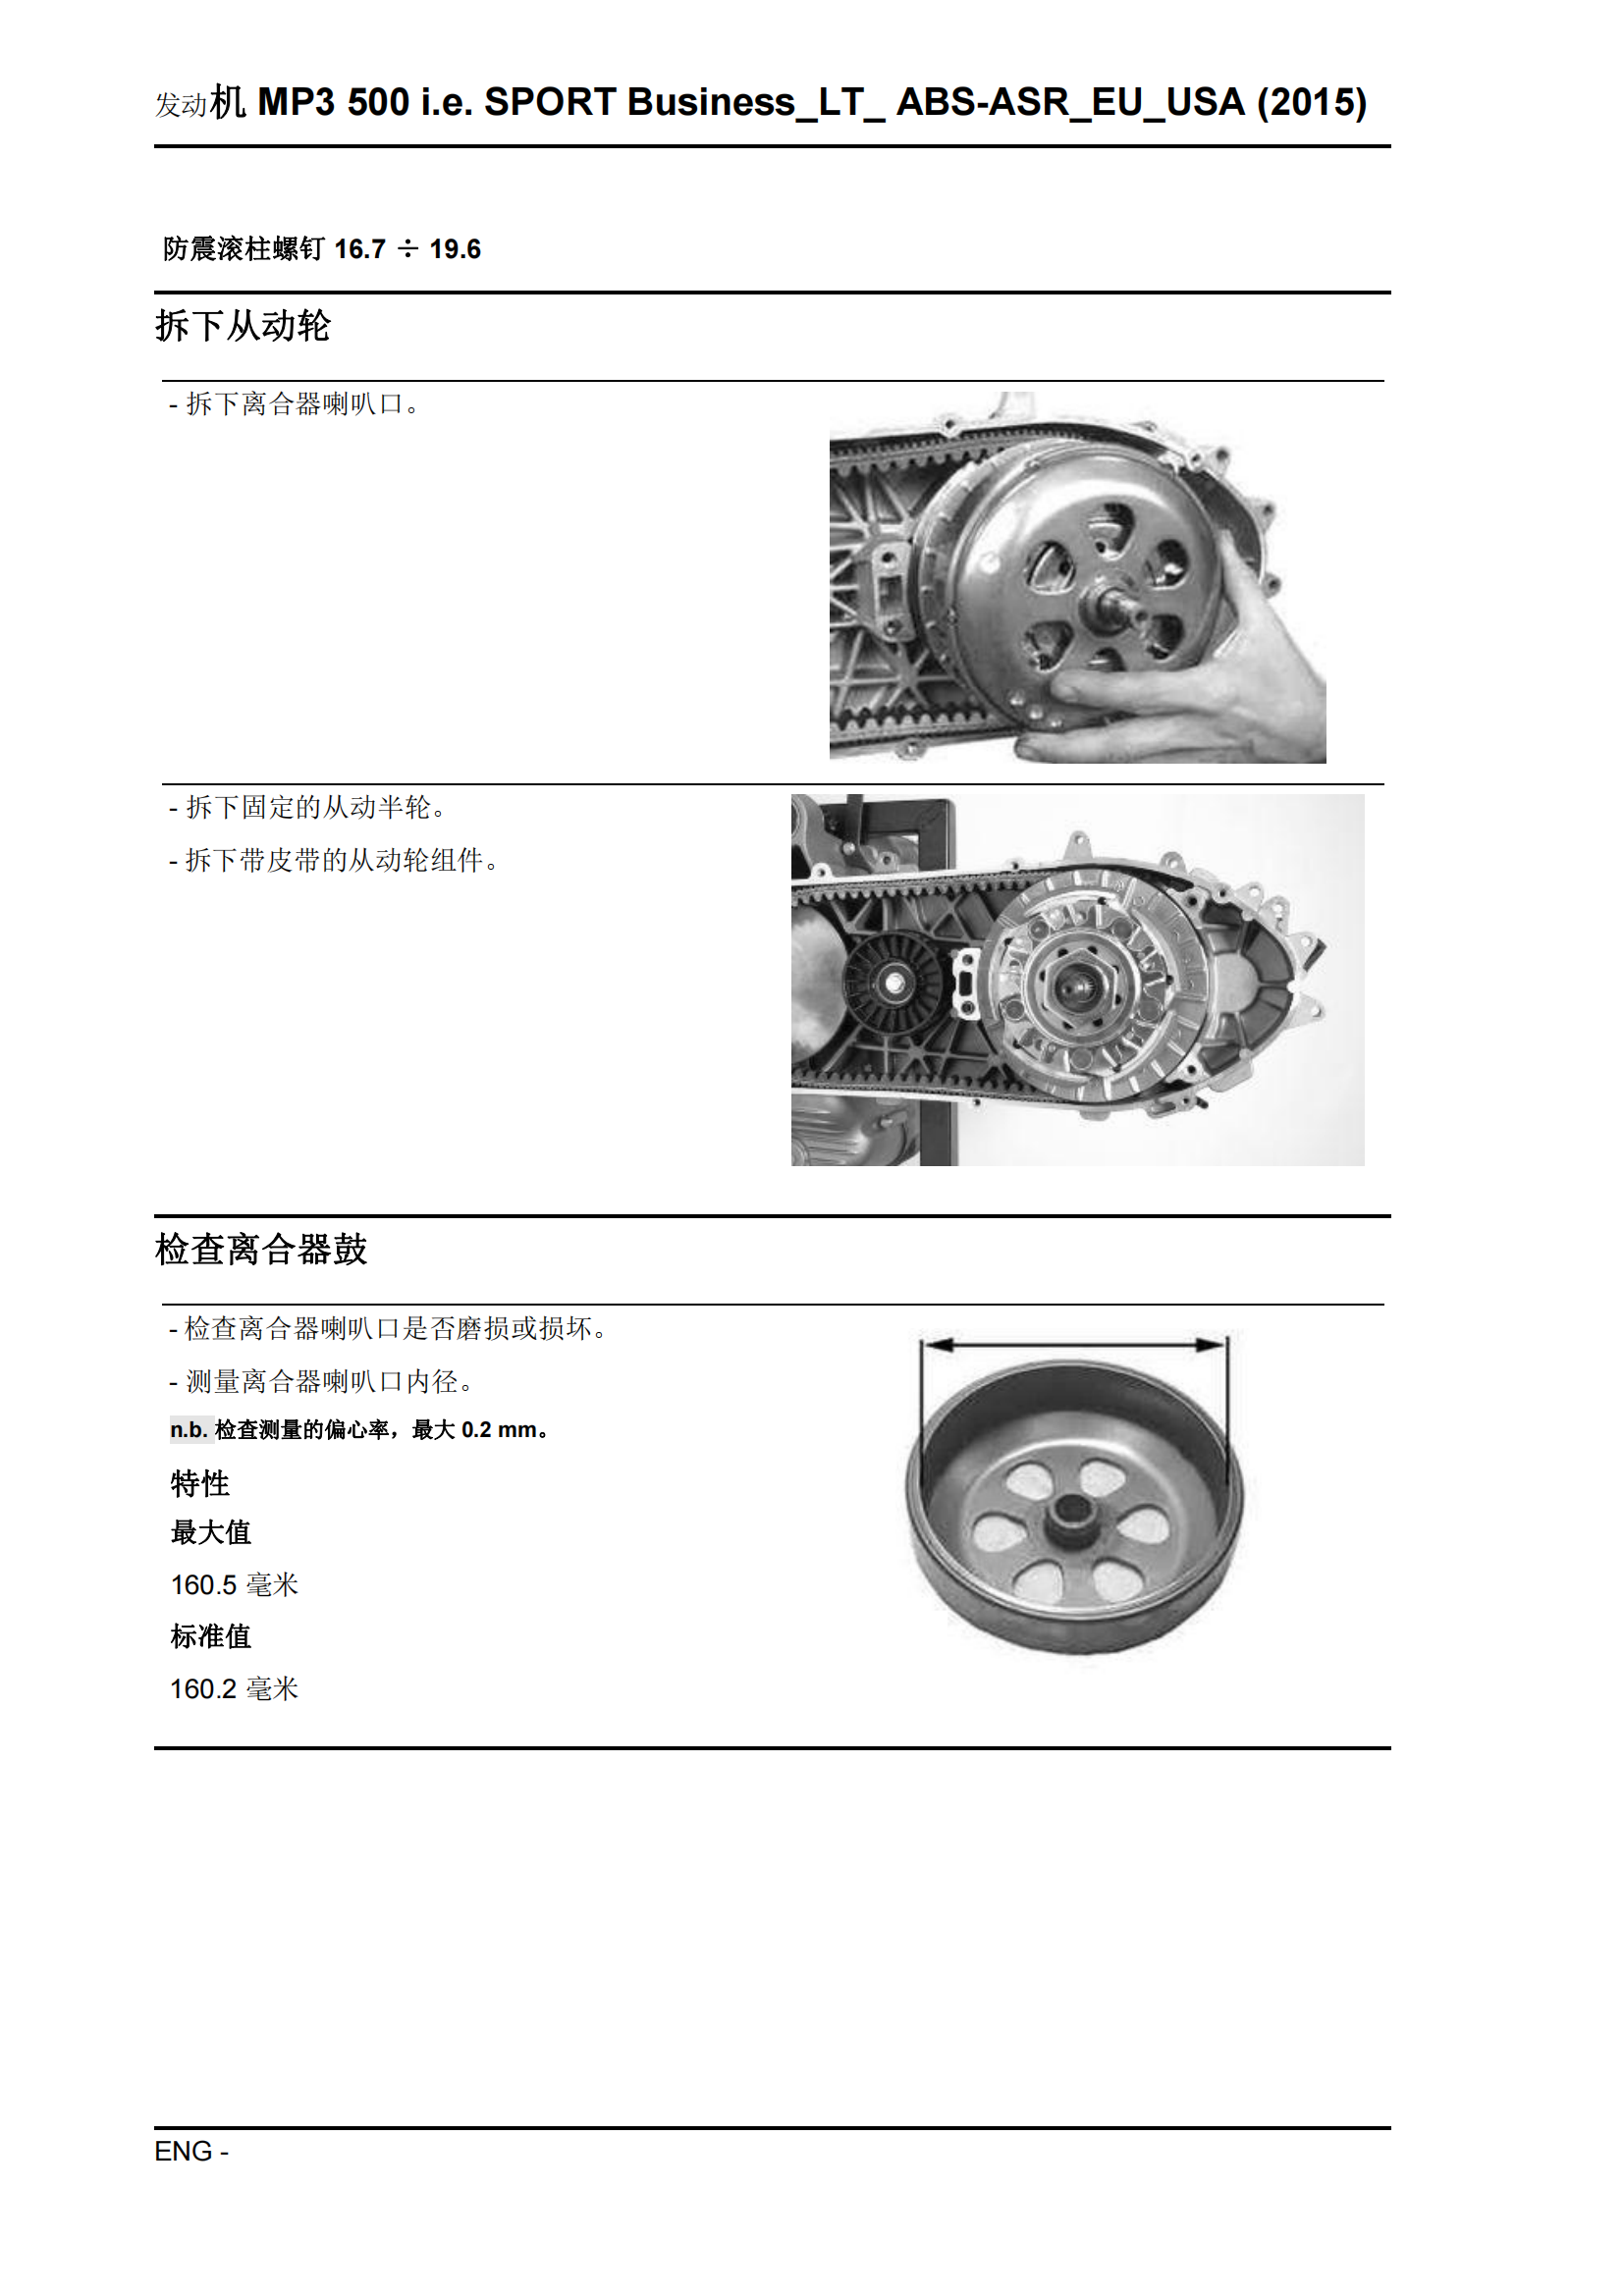 简体中文2015年比亚乔mp3 500维修手册MP3 500 i.e. SPORT Business维修手册插图3